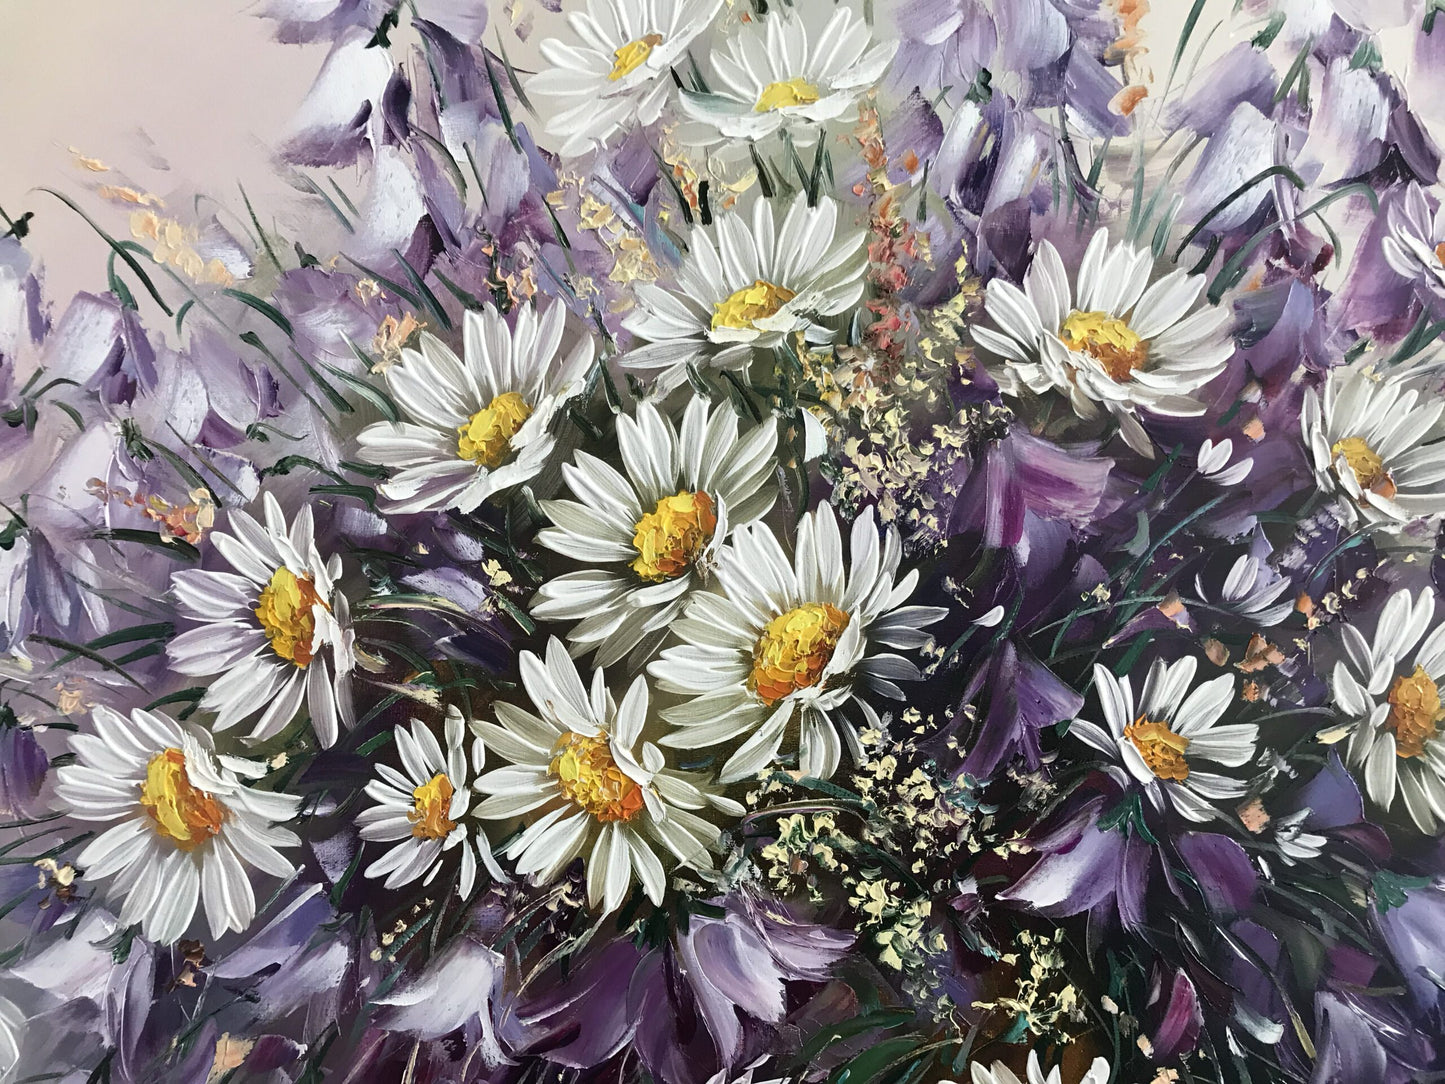 Purple Wildflowers Bouquet Oil Painting Flowers in Vase Artwork Still Life Flower Vase Painting on Canvas